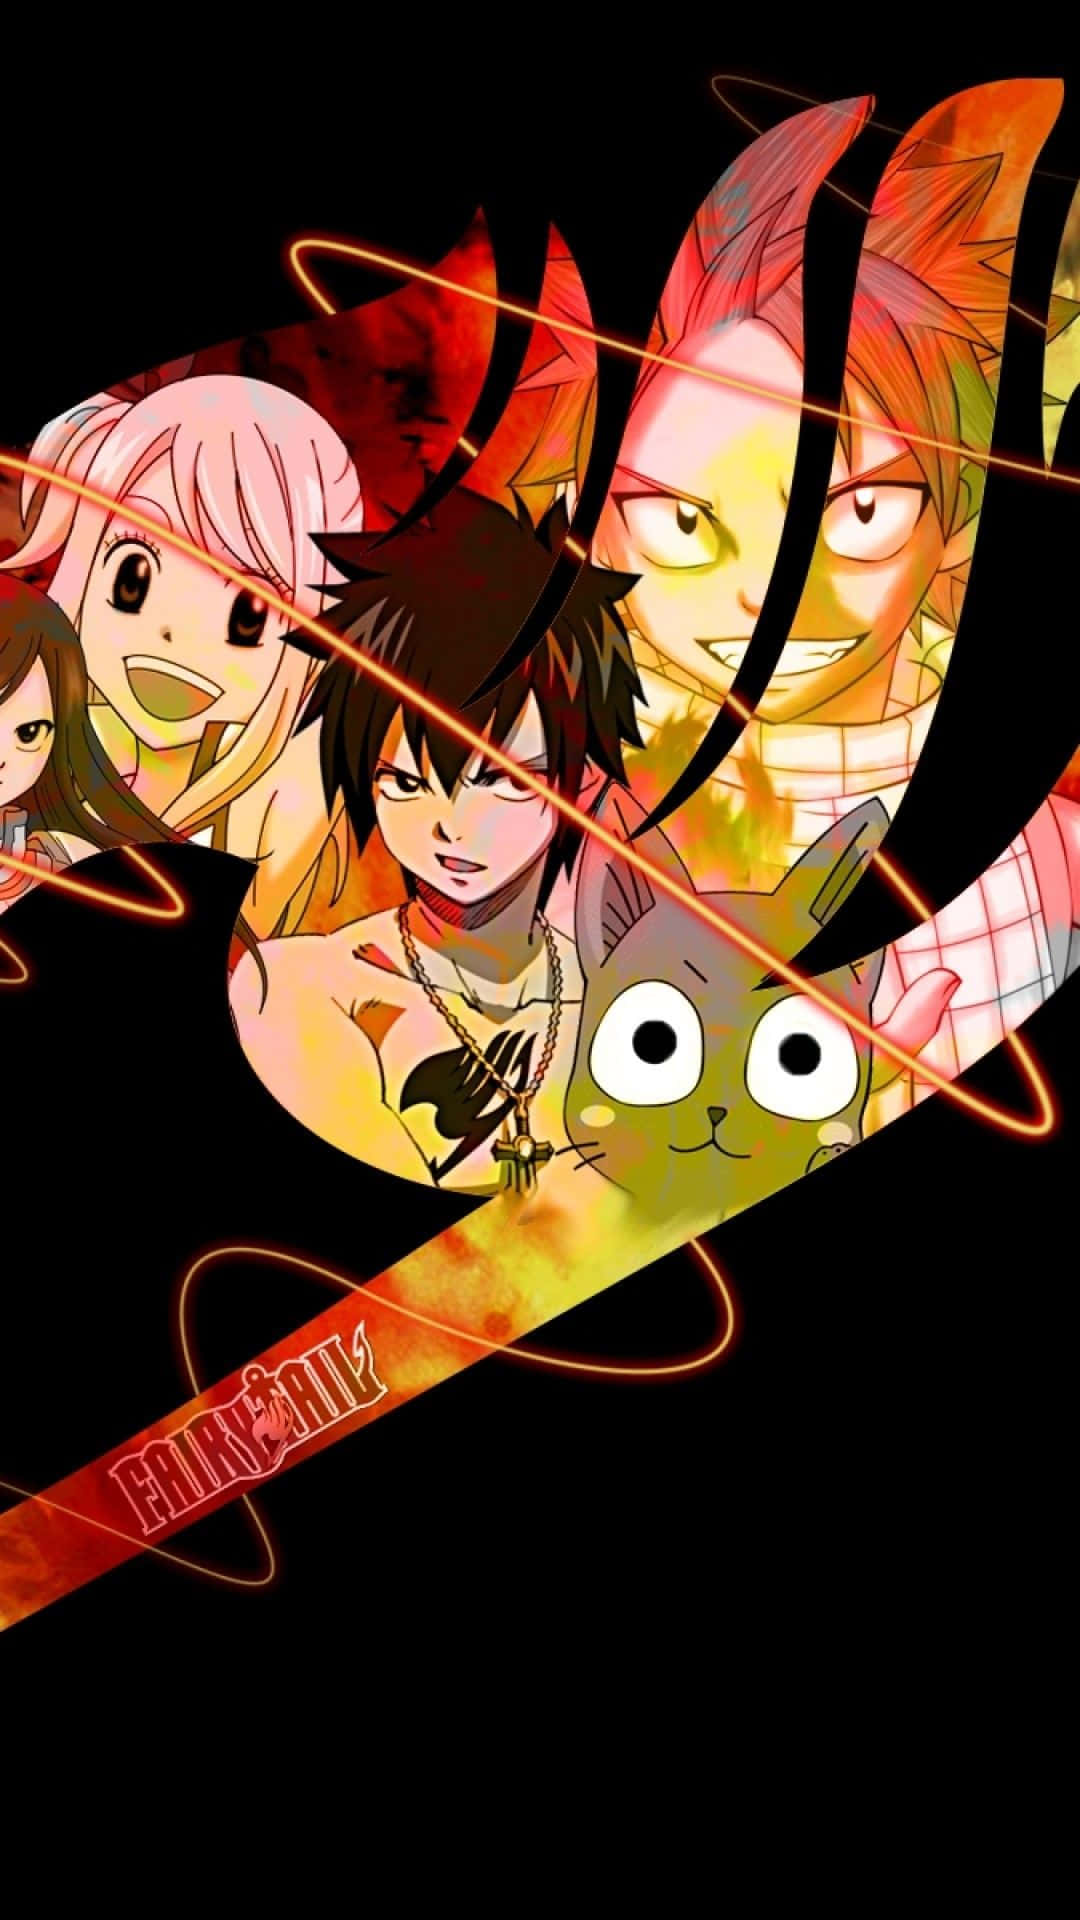 Wallpaper ID 433436  Anime Fairy Tail Phone Wallpaper Natsu Dragneel  750x1334 free download